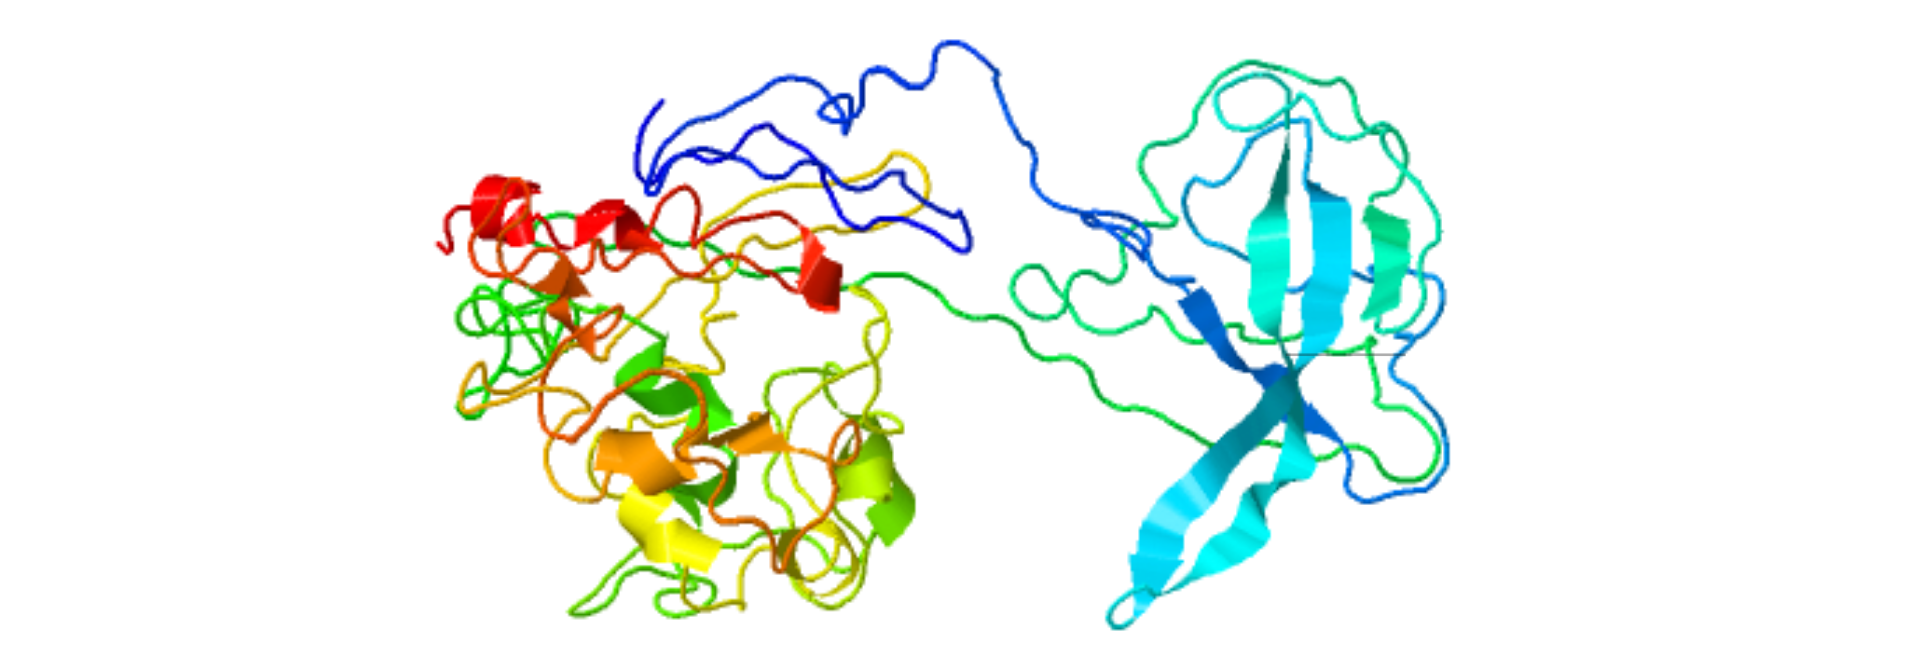 Структура SARS-CoV-2 N protein. 
Структура смоделированна C-I-TASSER.
